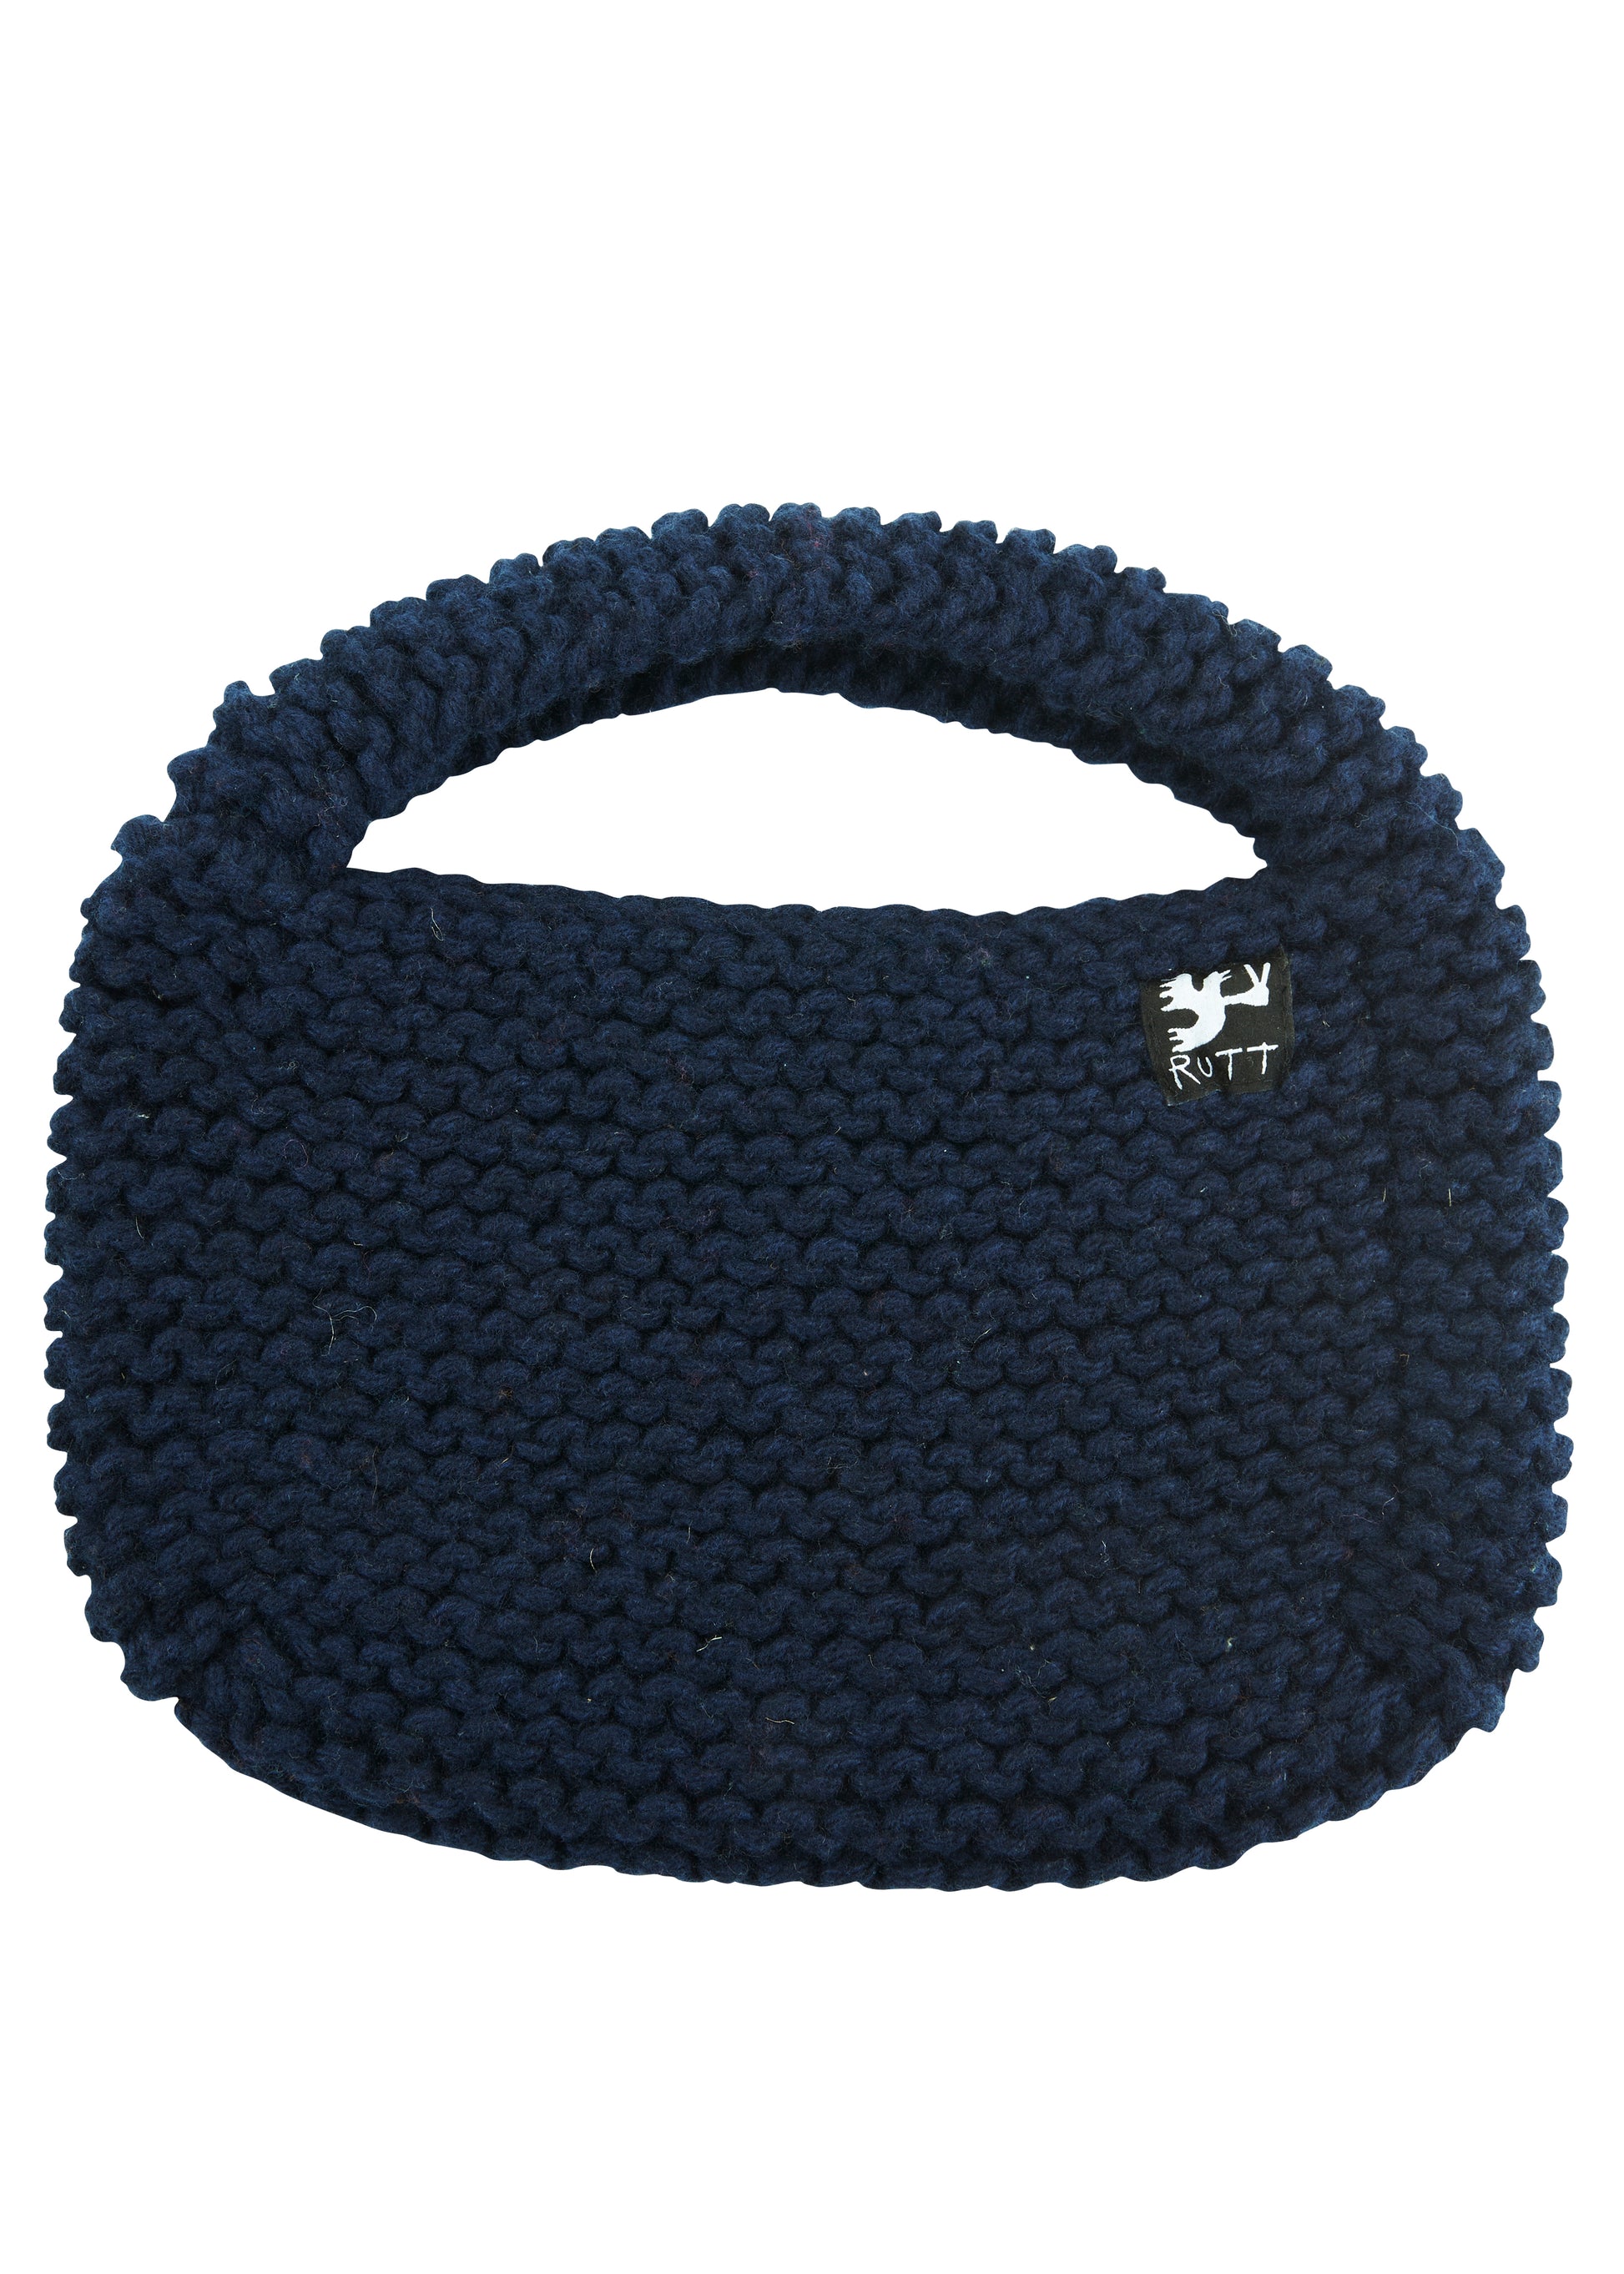 Chunky knit single strap hand bag made of soft Australian merino wool. 